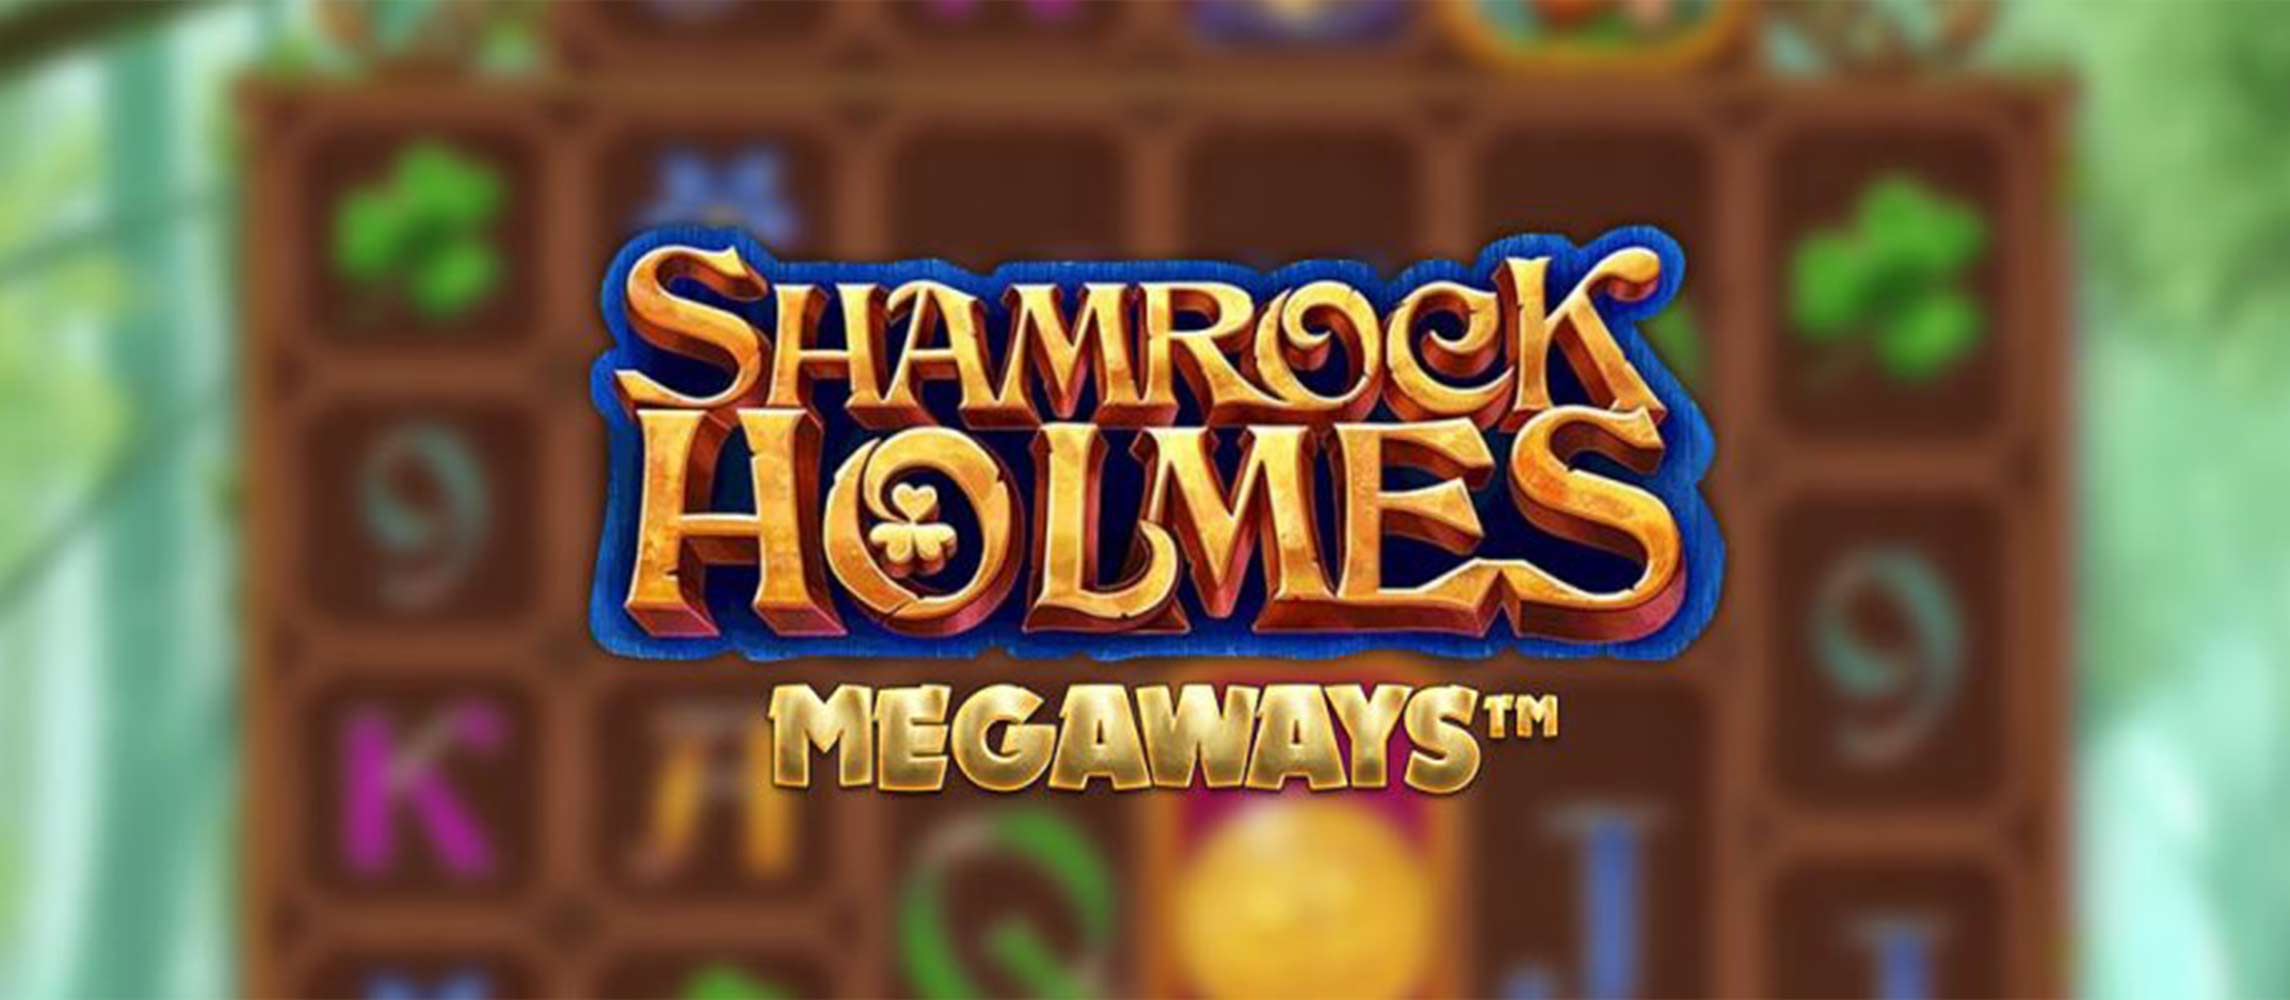 Shamrock Holmes Megaways by Microgaming